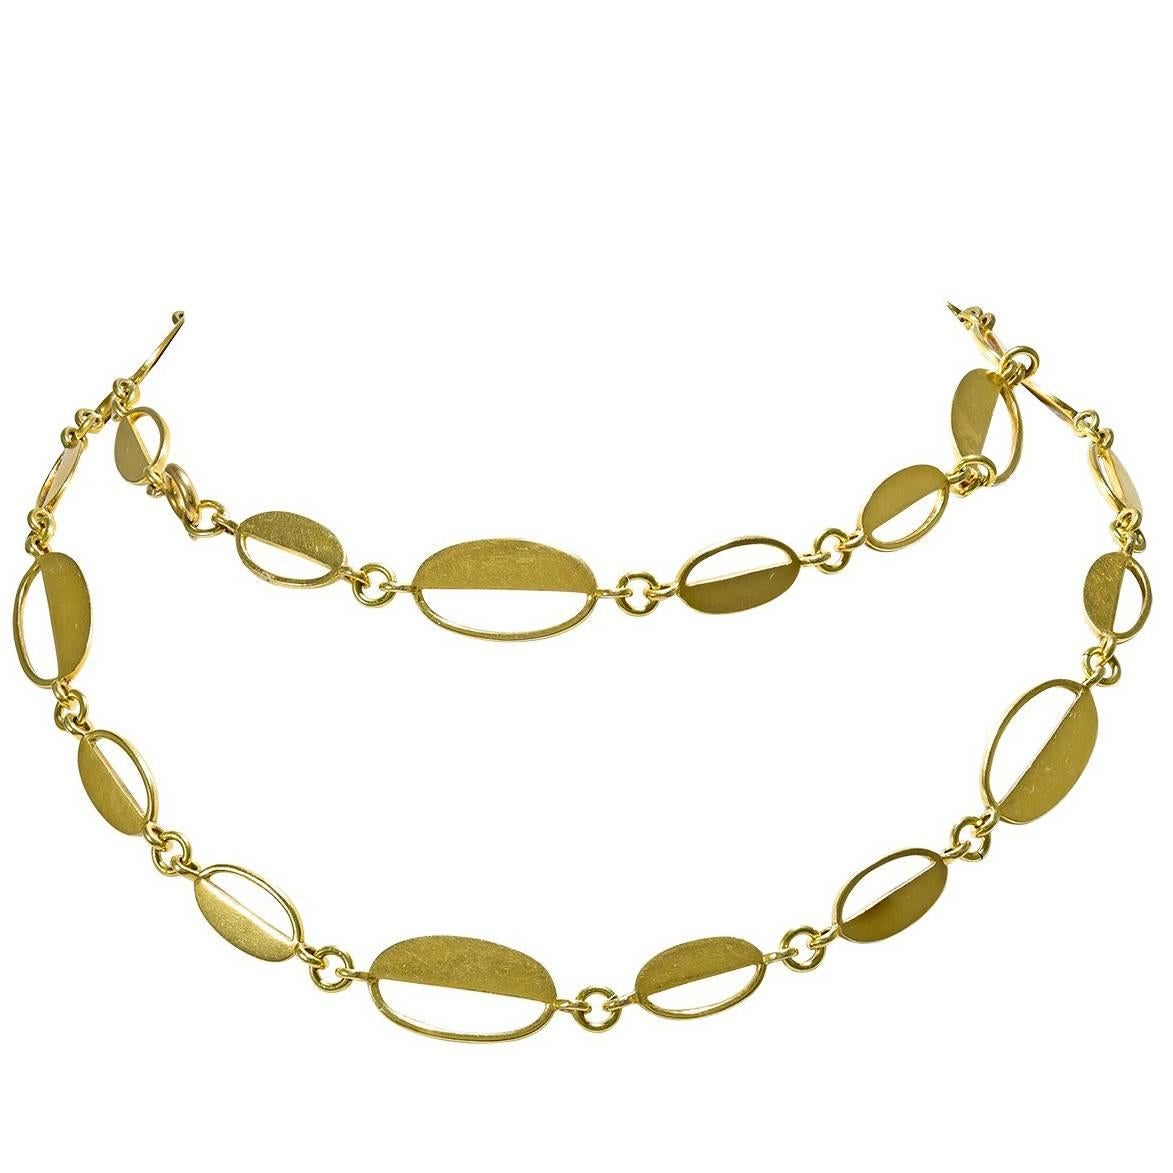 Italian 18 Karat Gold Handmade Chain For Sale